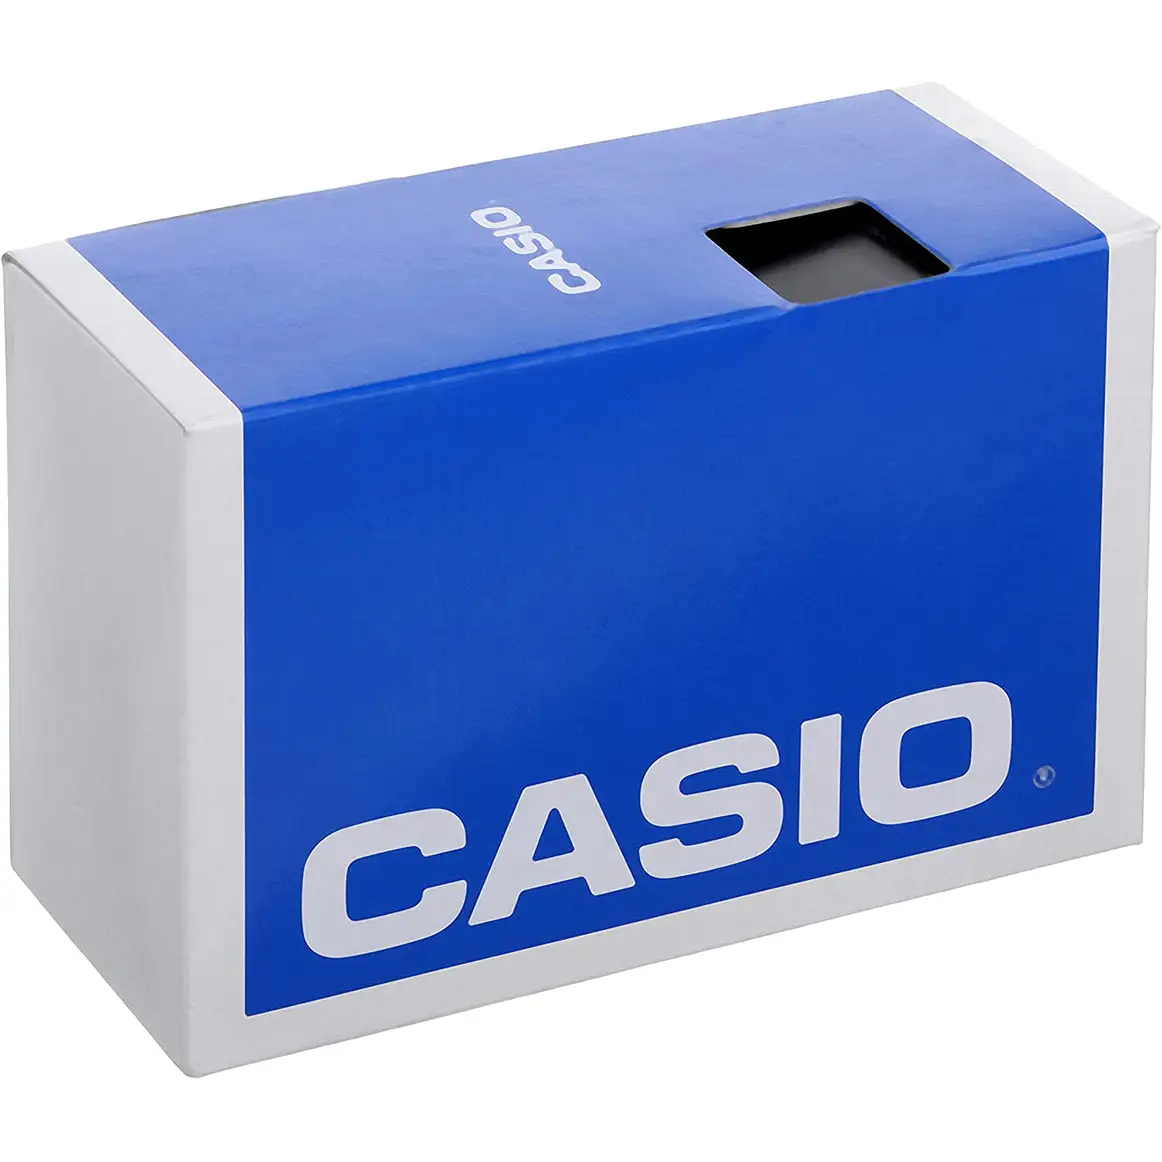 Casio Men’s Sports Digital Quartz 7-yr Battery Black Resin